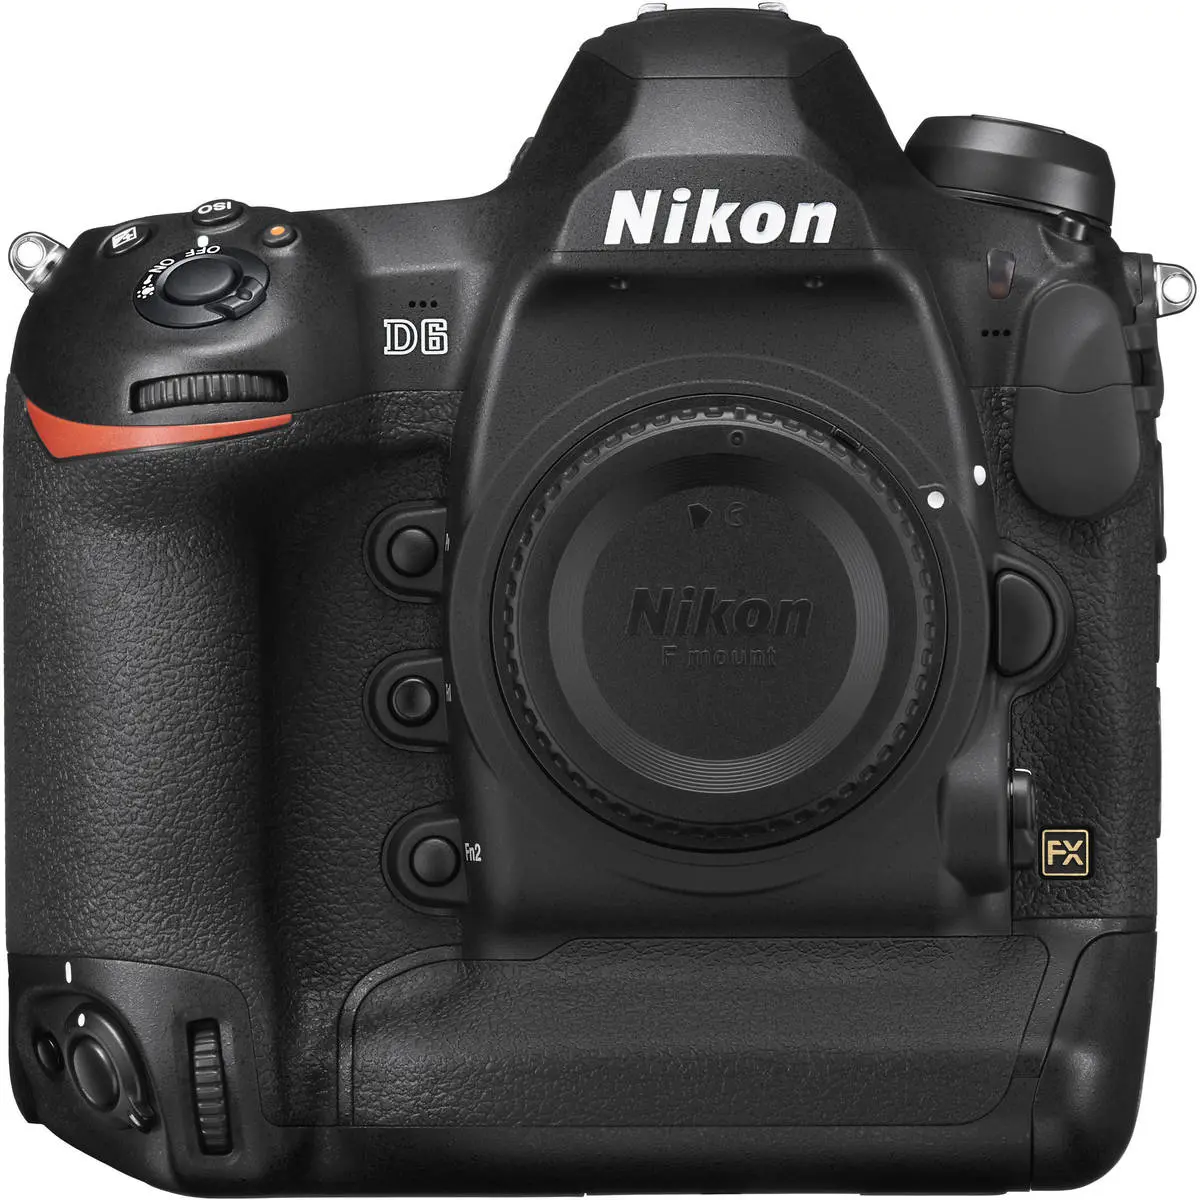 Main Image Nikon D6 Body